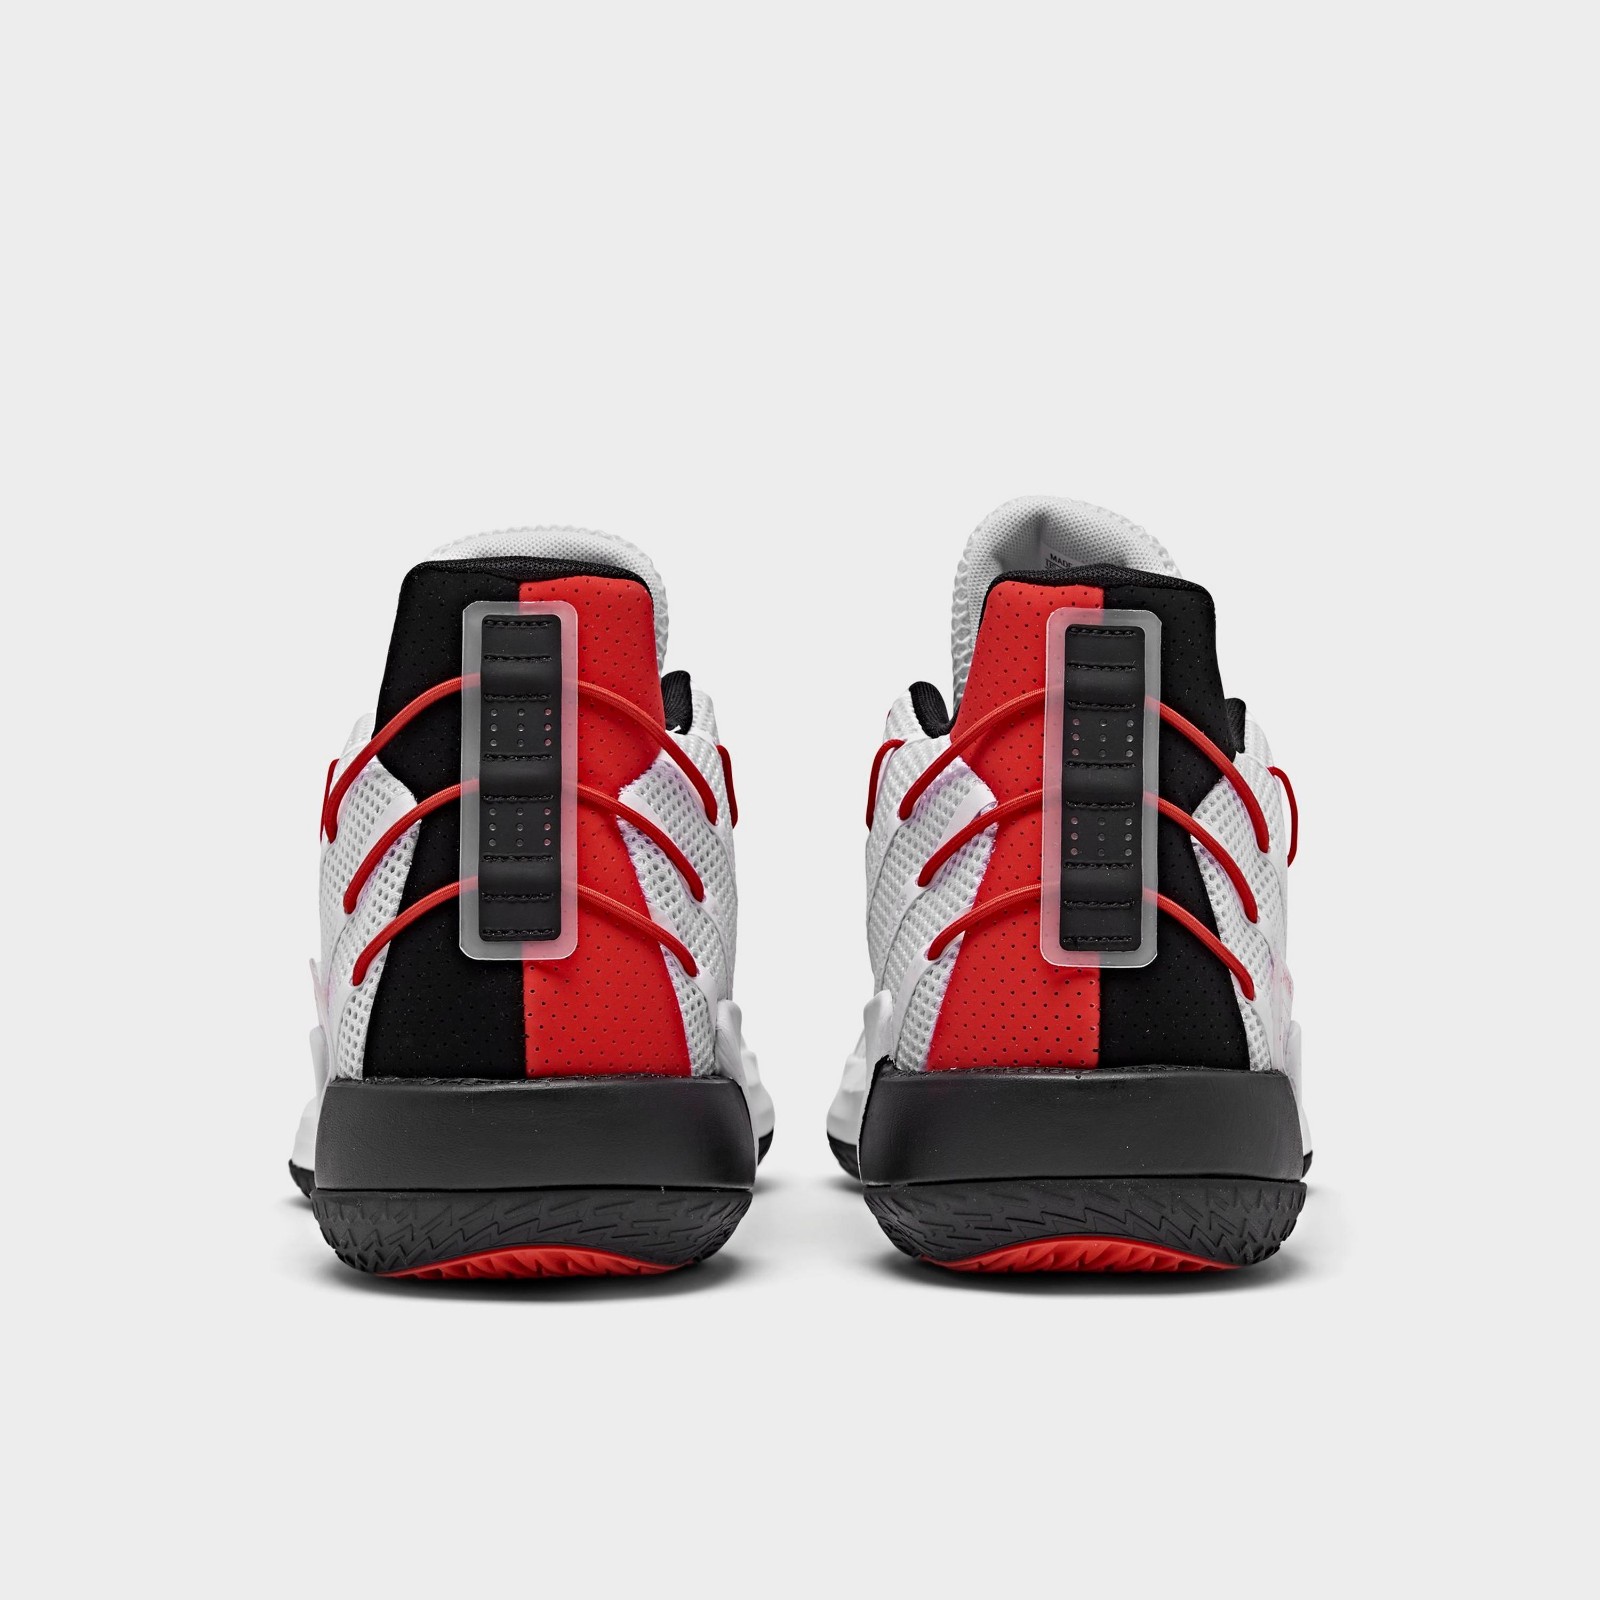 adidas,DAME 7  素净鞋身搭配红色点缀！adidas DAME 7 又出全新配色！